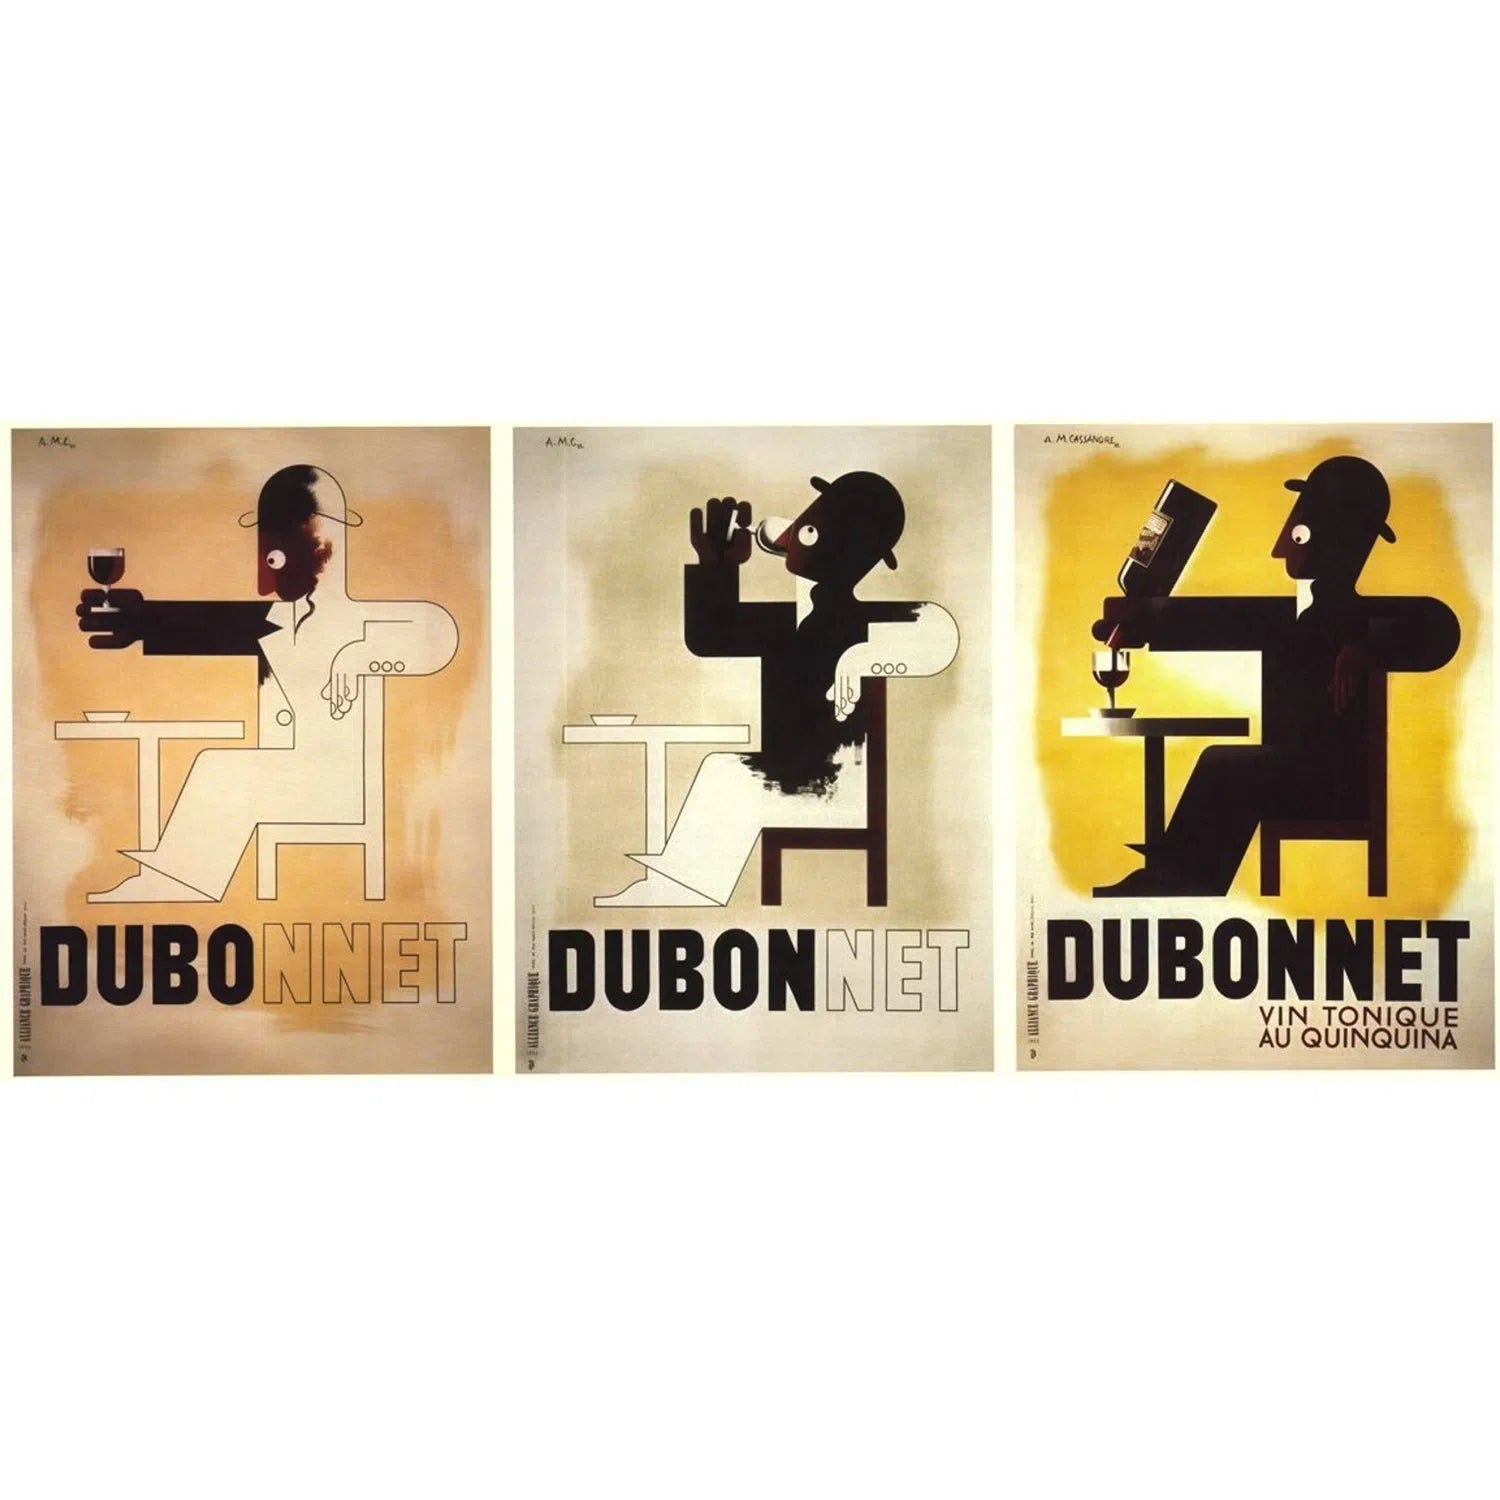 Dubo Dubon Dubonnet-Imagesdartistes